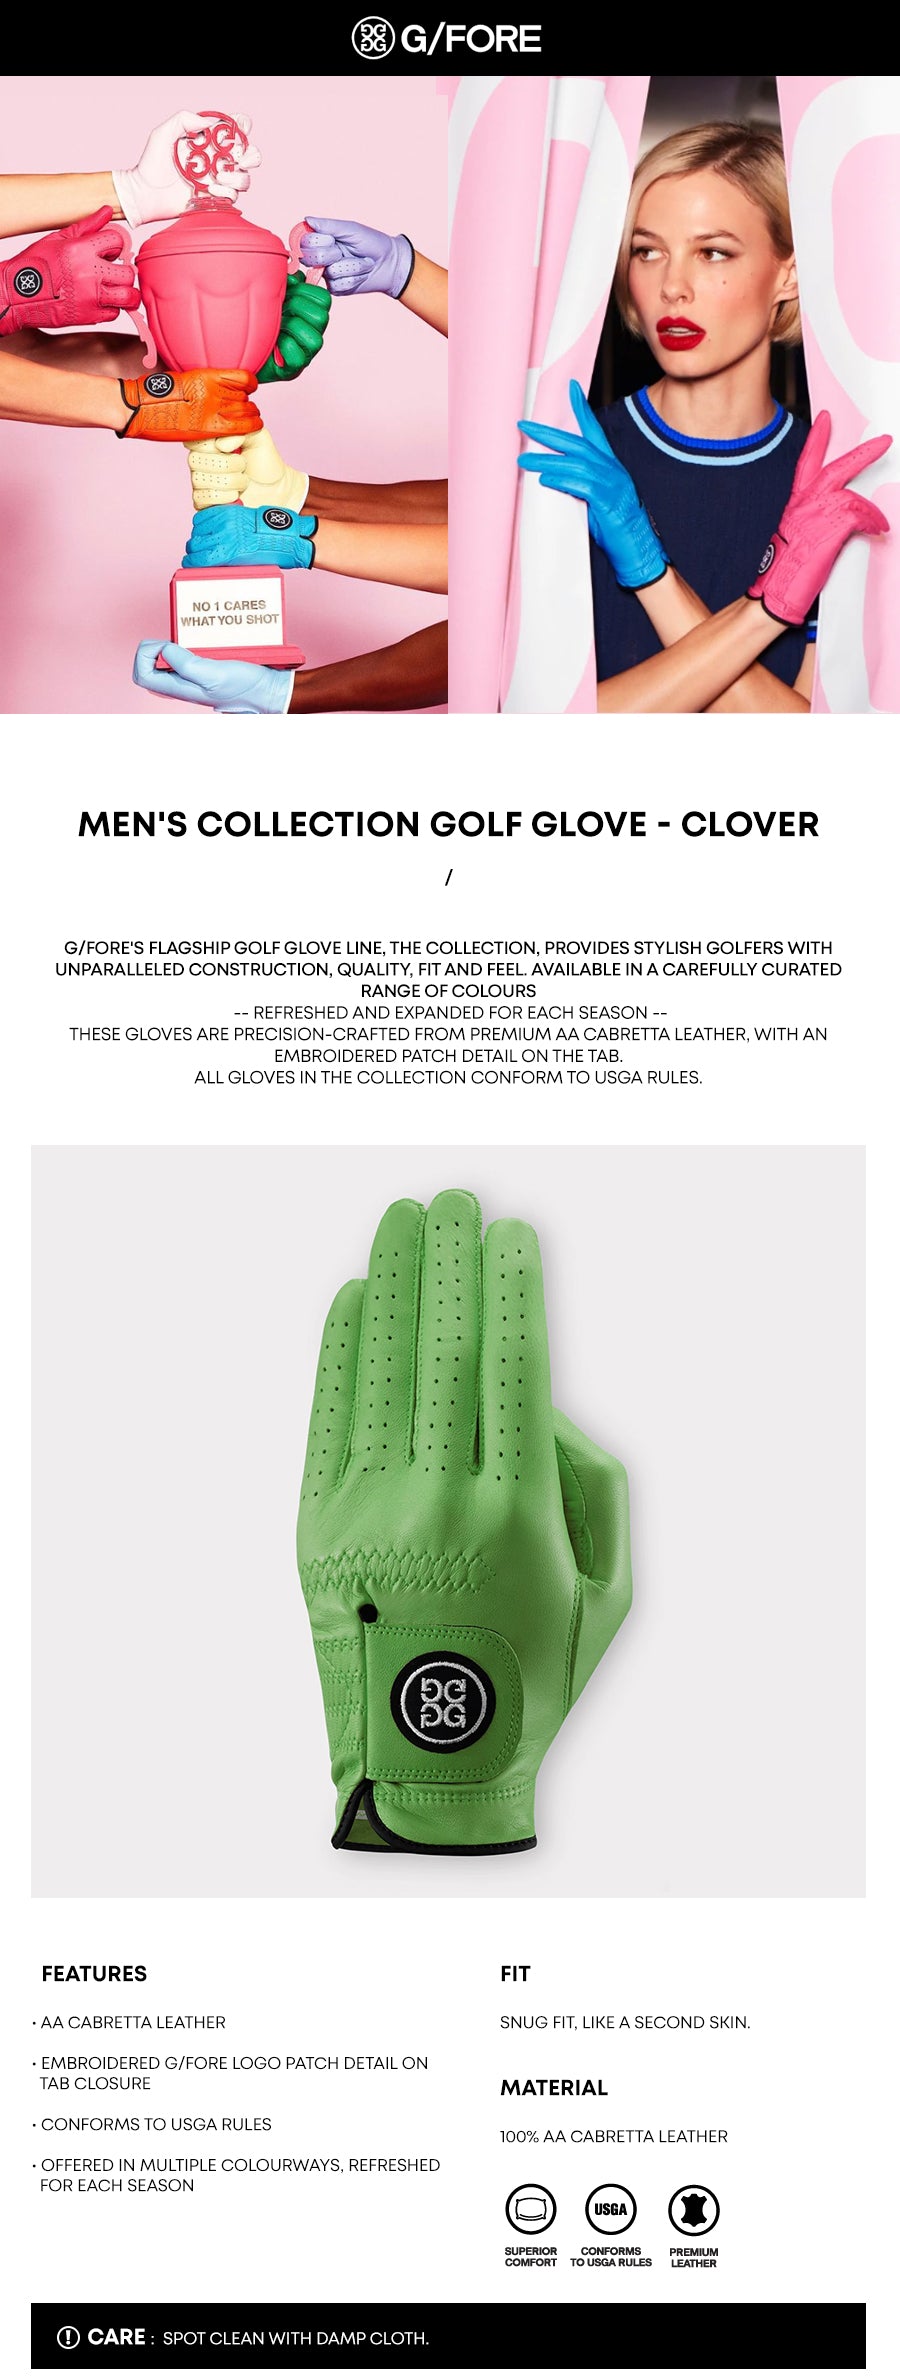 gfore-mens-collection-golf-glove-clover